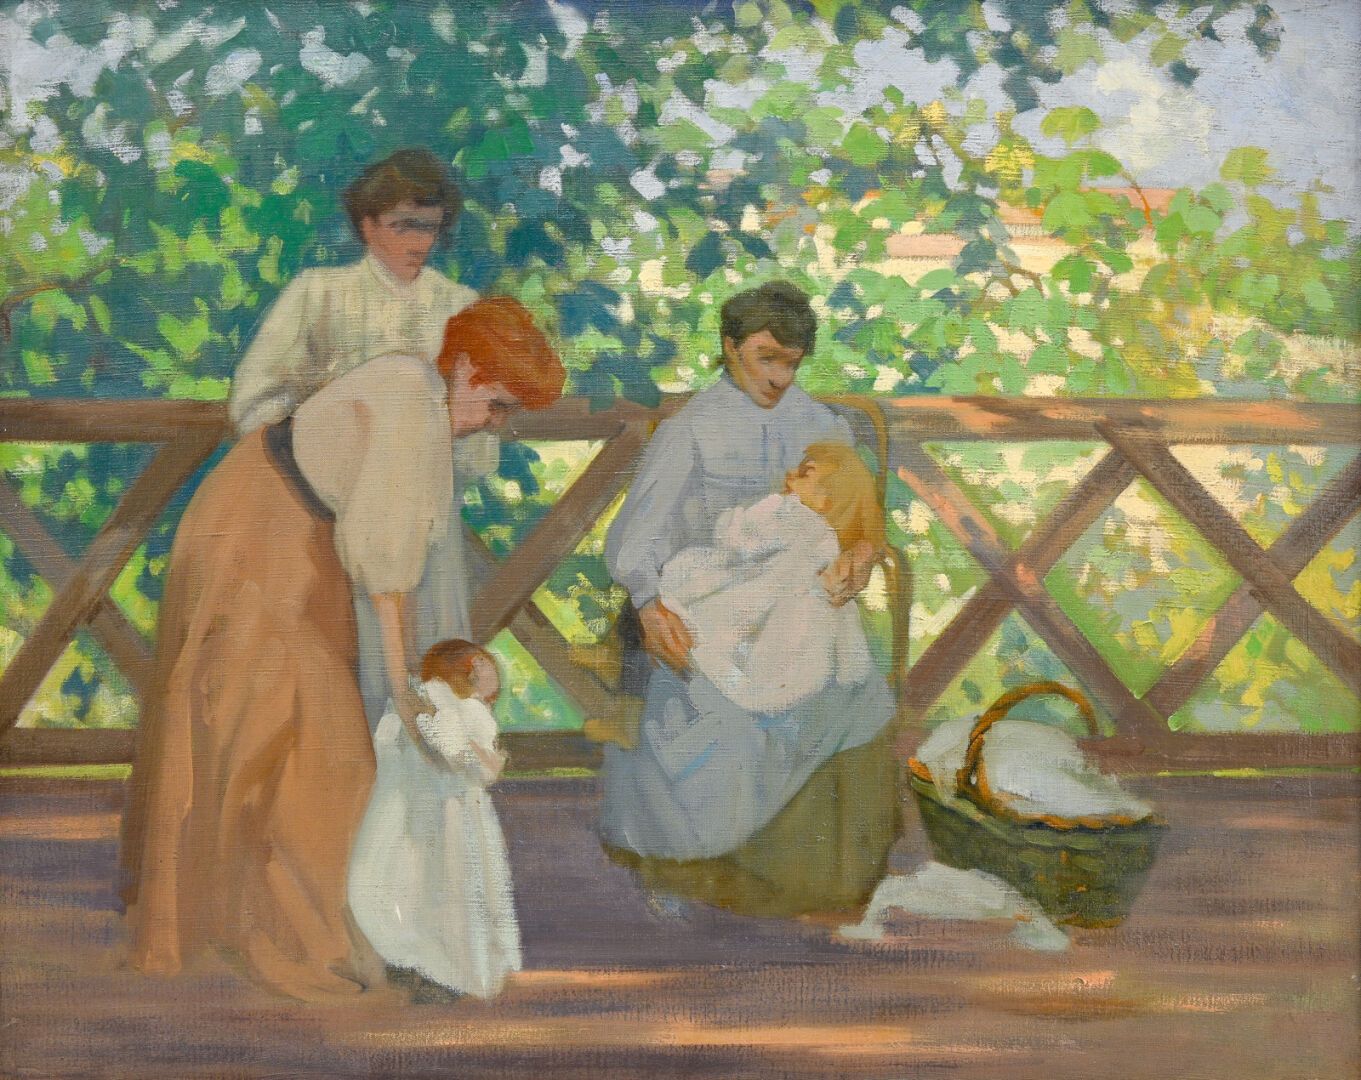 Null Henri HOURTAL (1877-1944)
The nannies 
Oil on canvas 
65 x 81 cm.